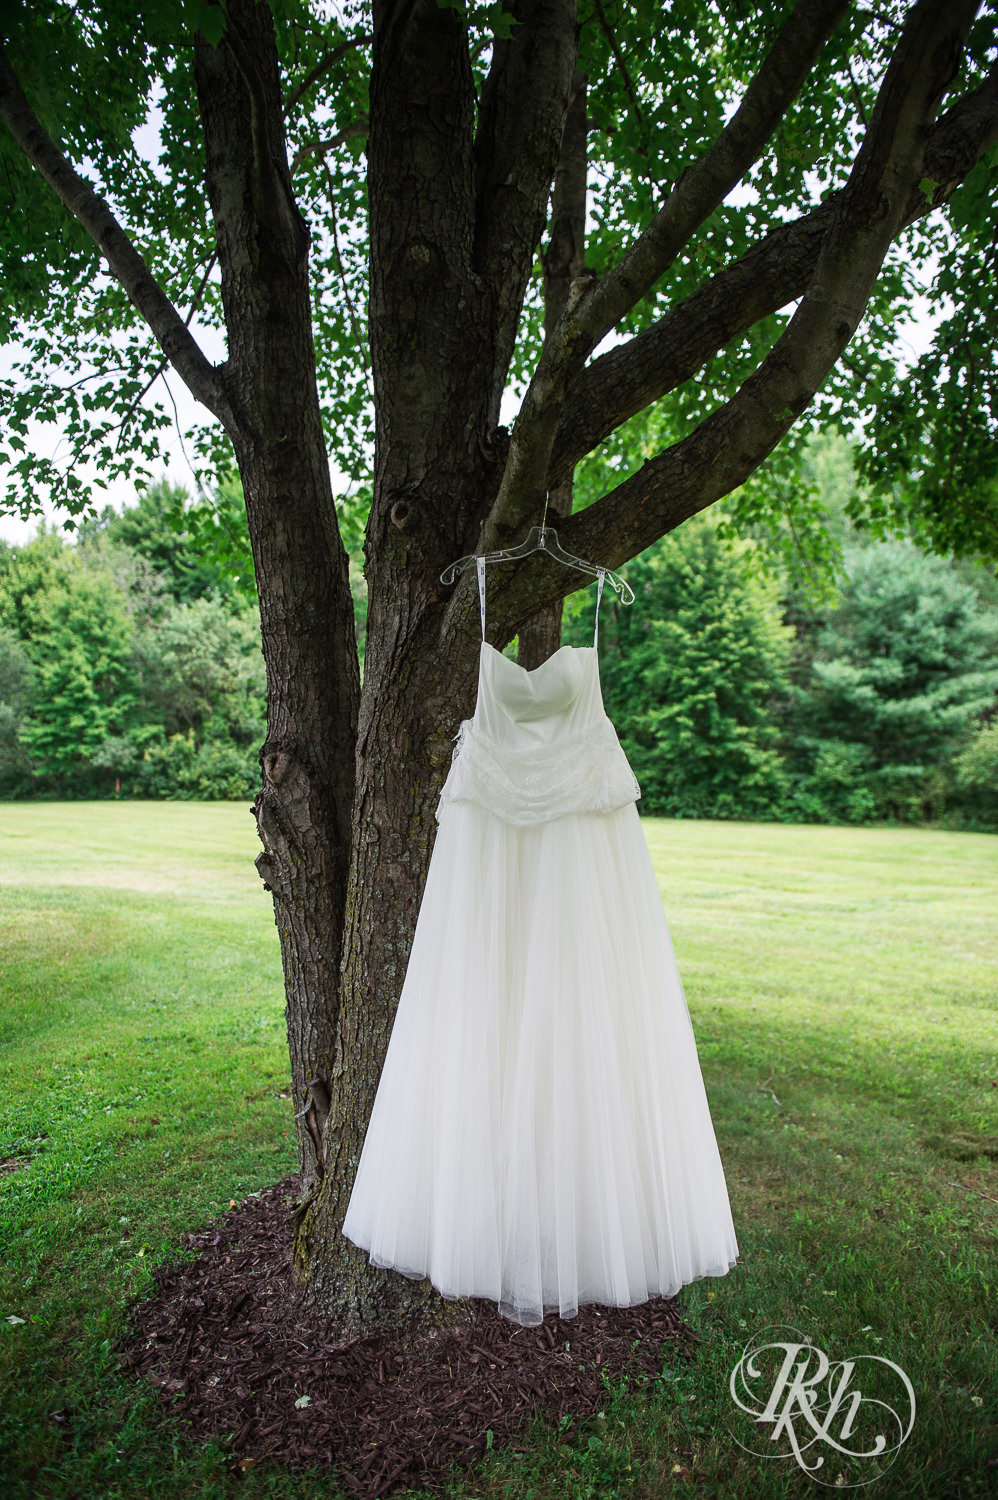 Wedding dress hanging from tree in Elk Mound, Wisconsin.